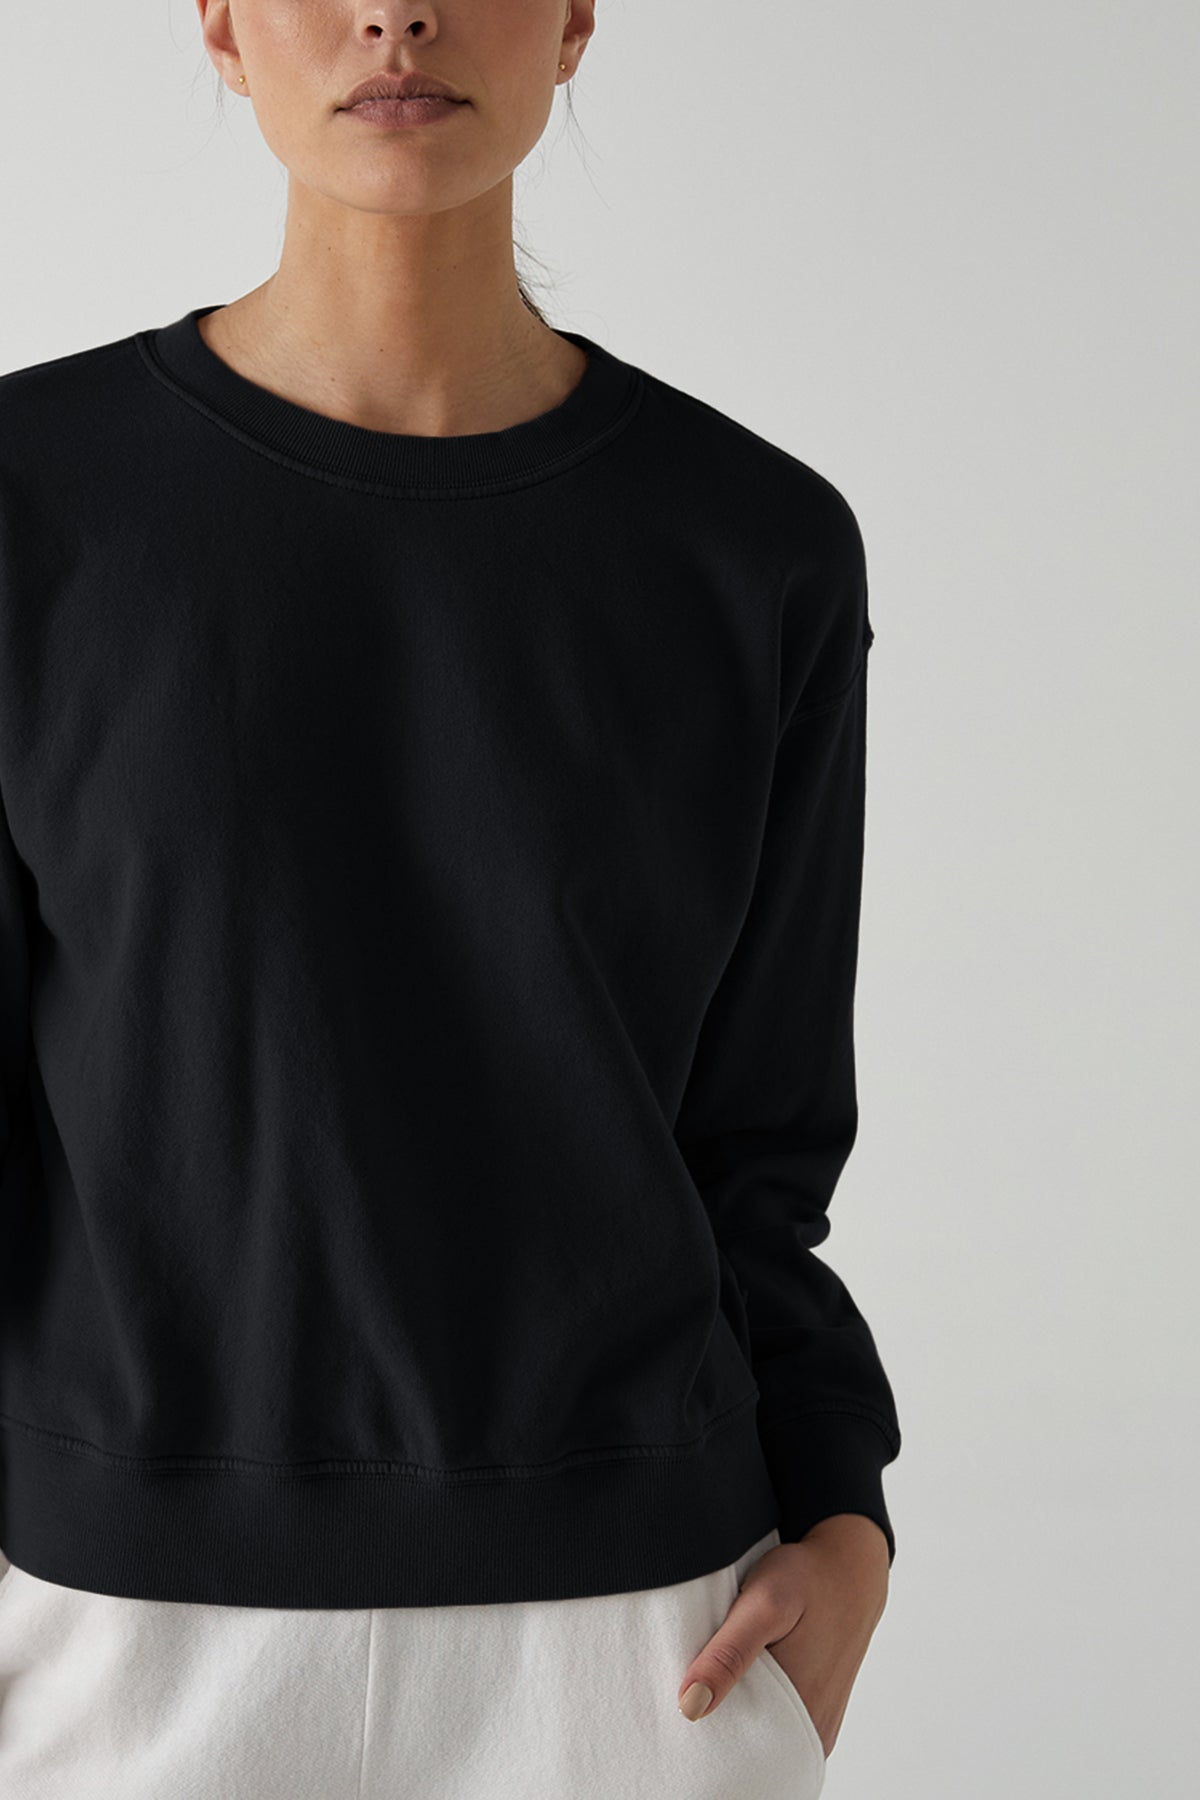   ynez sweatshirt black front detail and zuma pant beach 